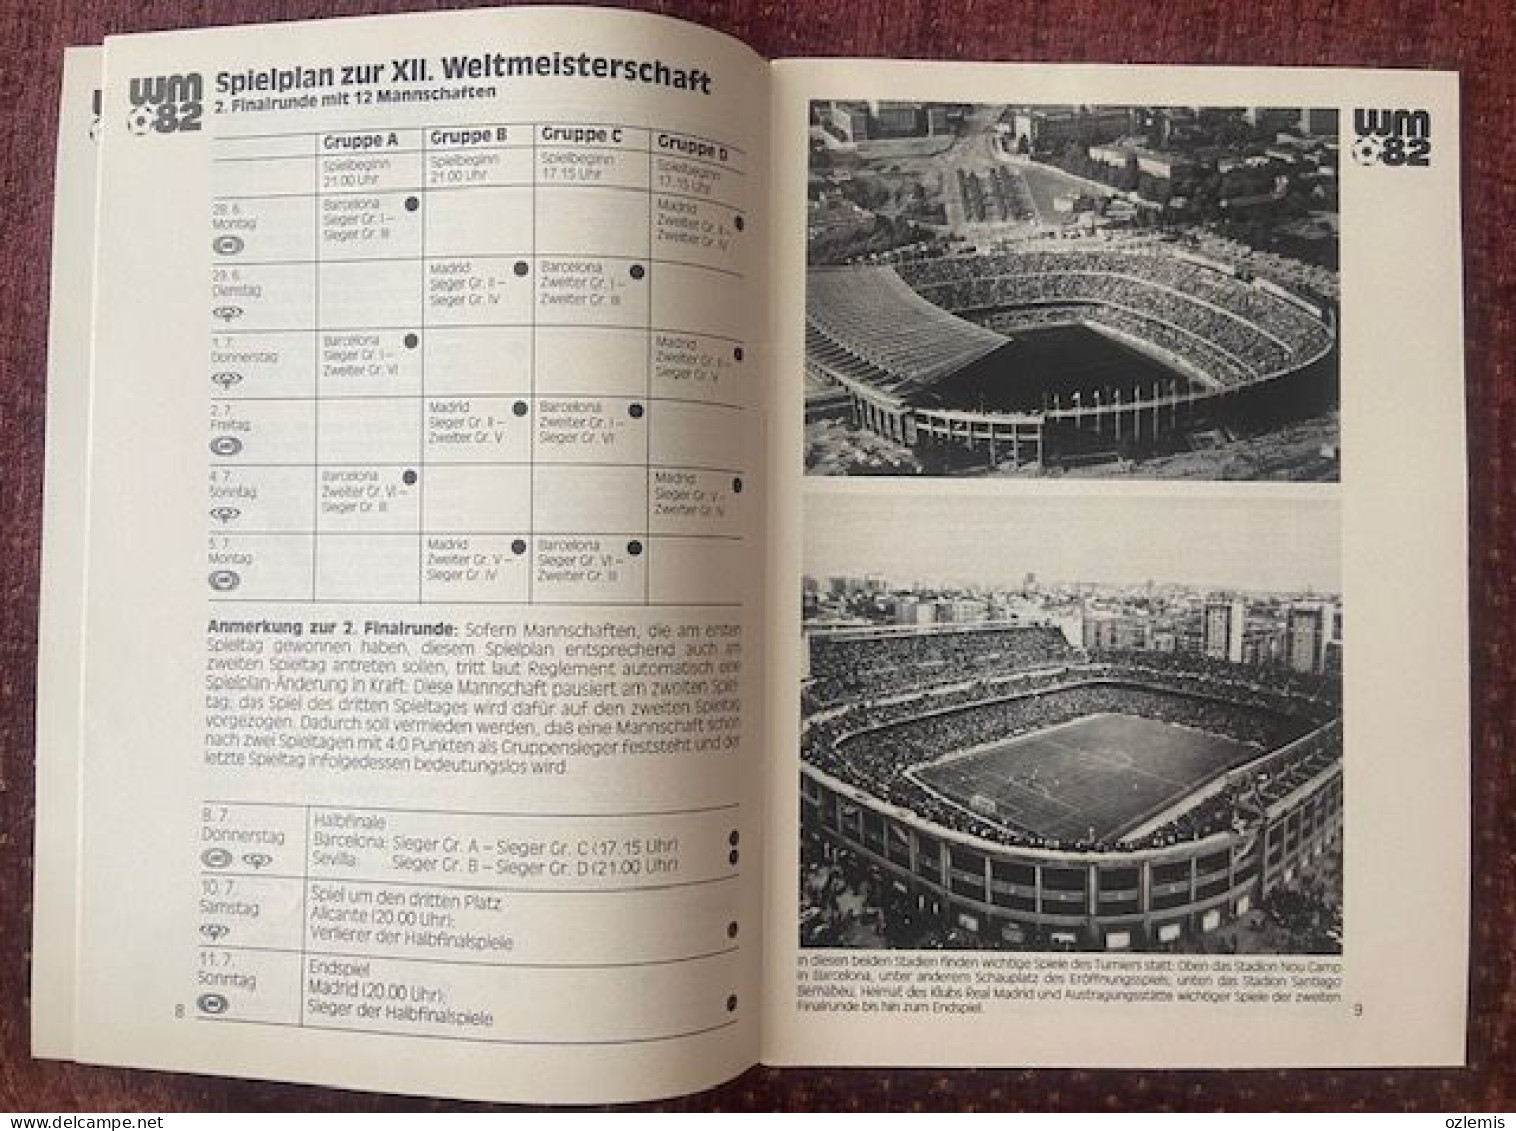 WM 82 ,FOOTBALL ,FESTIVAL ,13.6-11.7.1982 ,JUPP DERWALL, - Sports